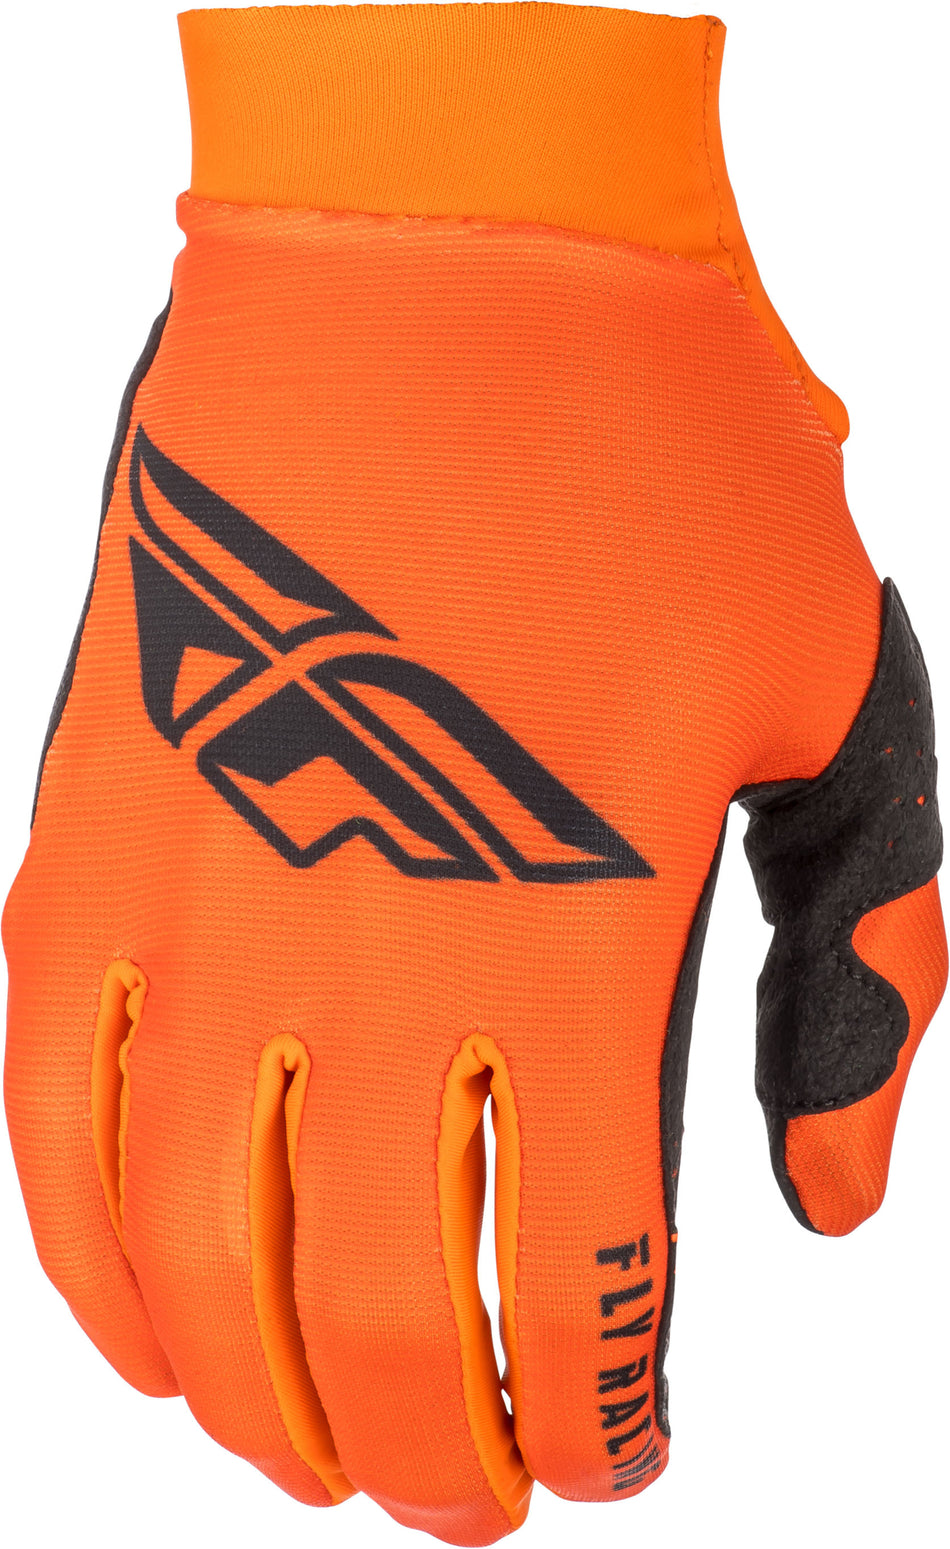 FLY RACING Pro Lite Gloves Orange/Black Sz 07 372-81707